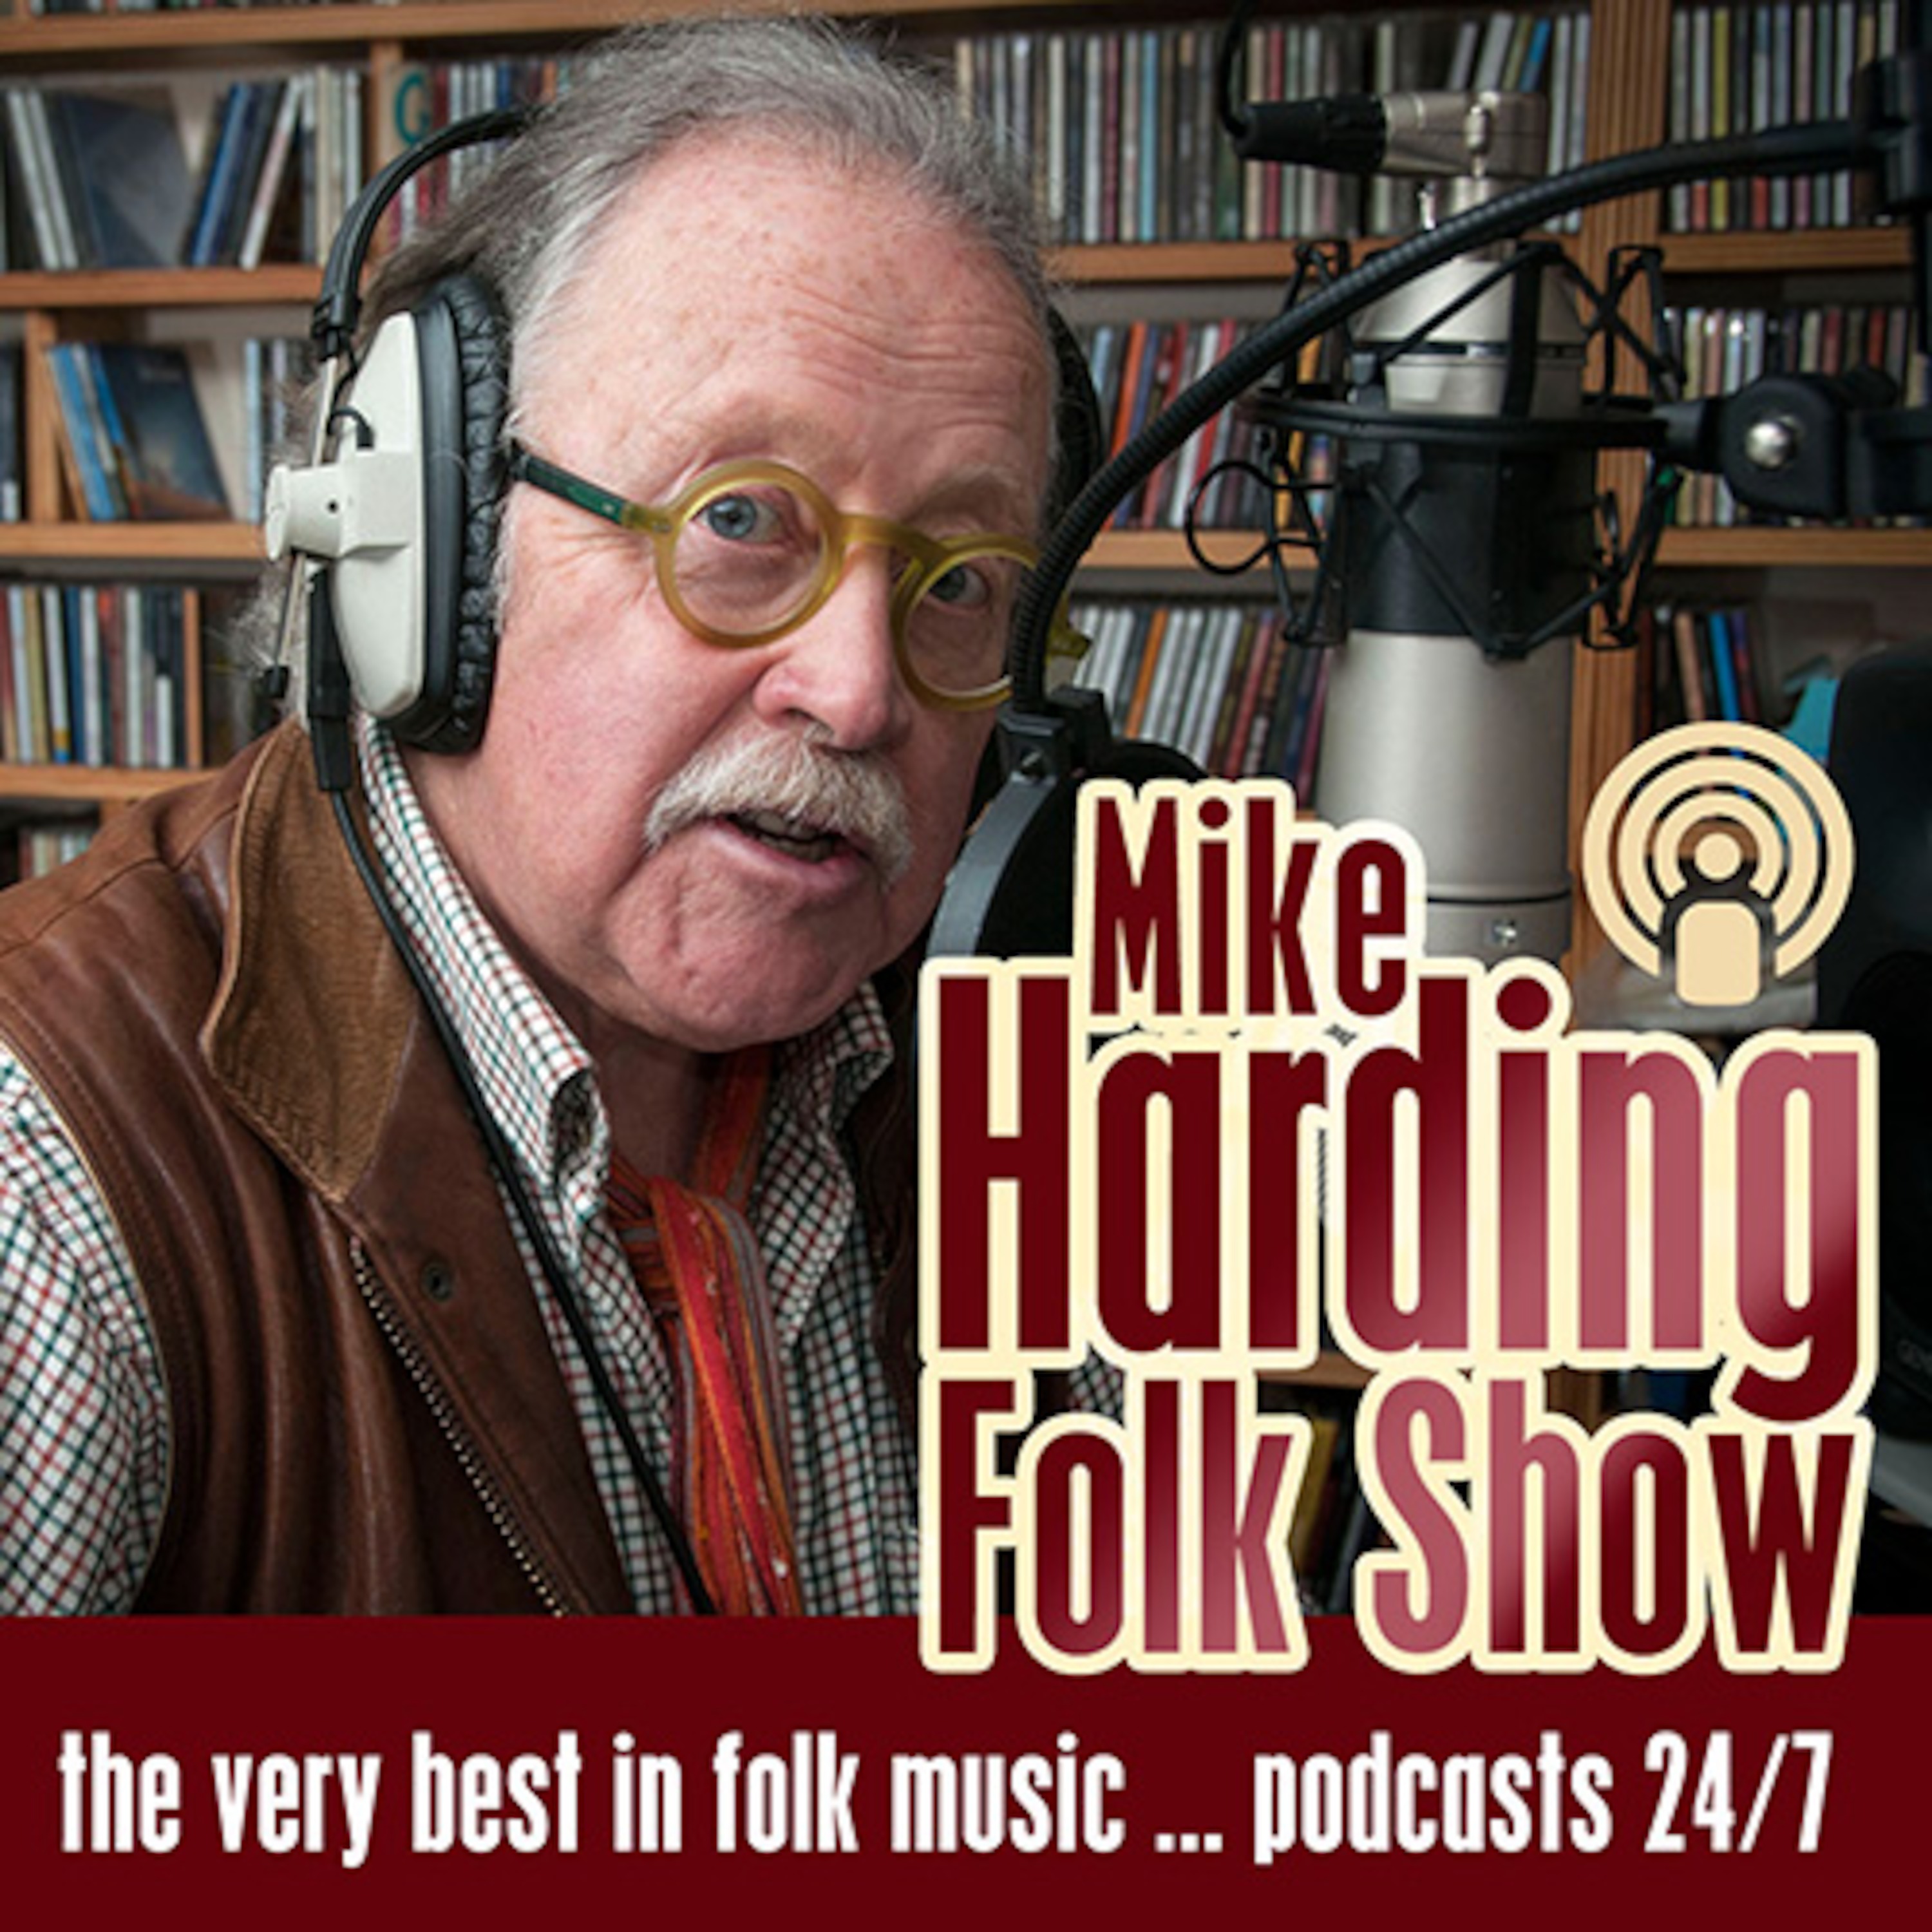 Mike Harding Folk Show 55